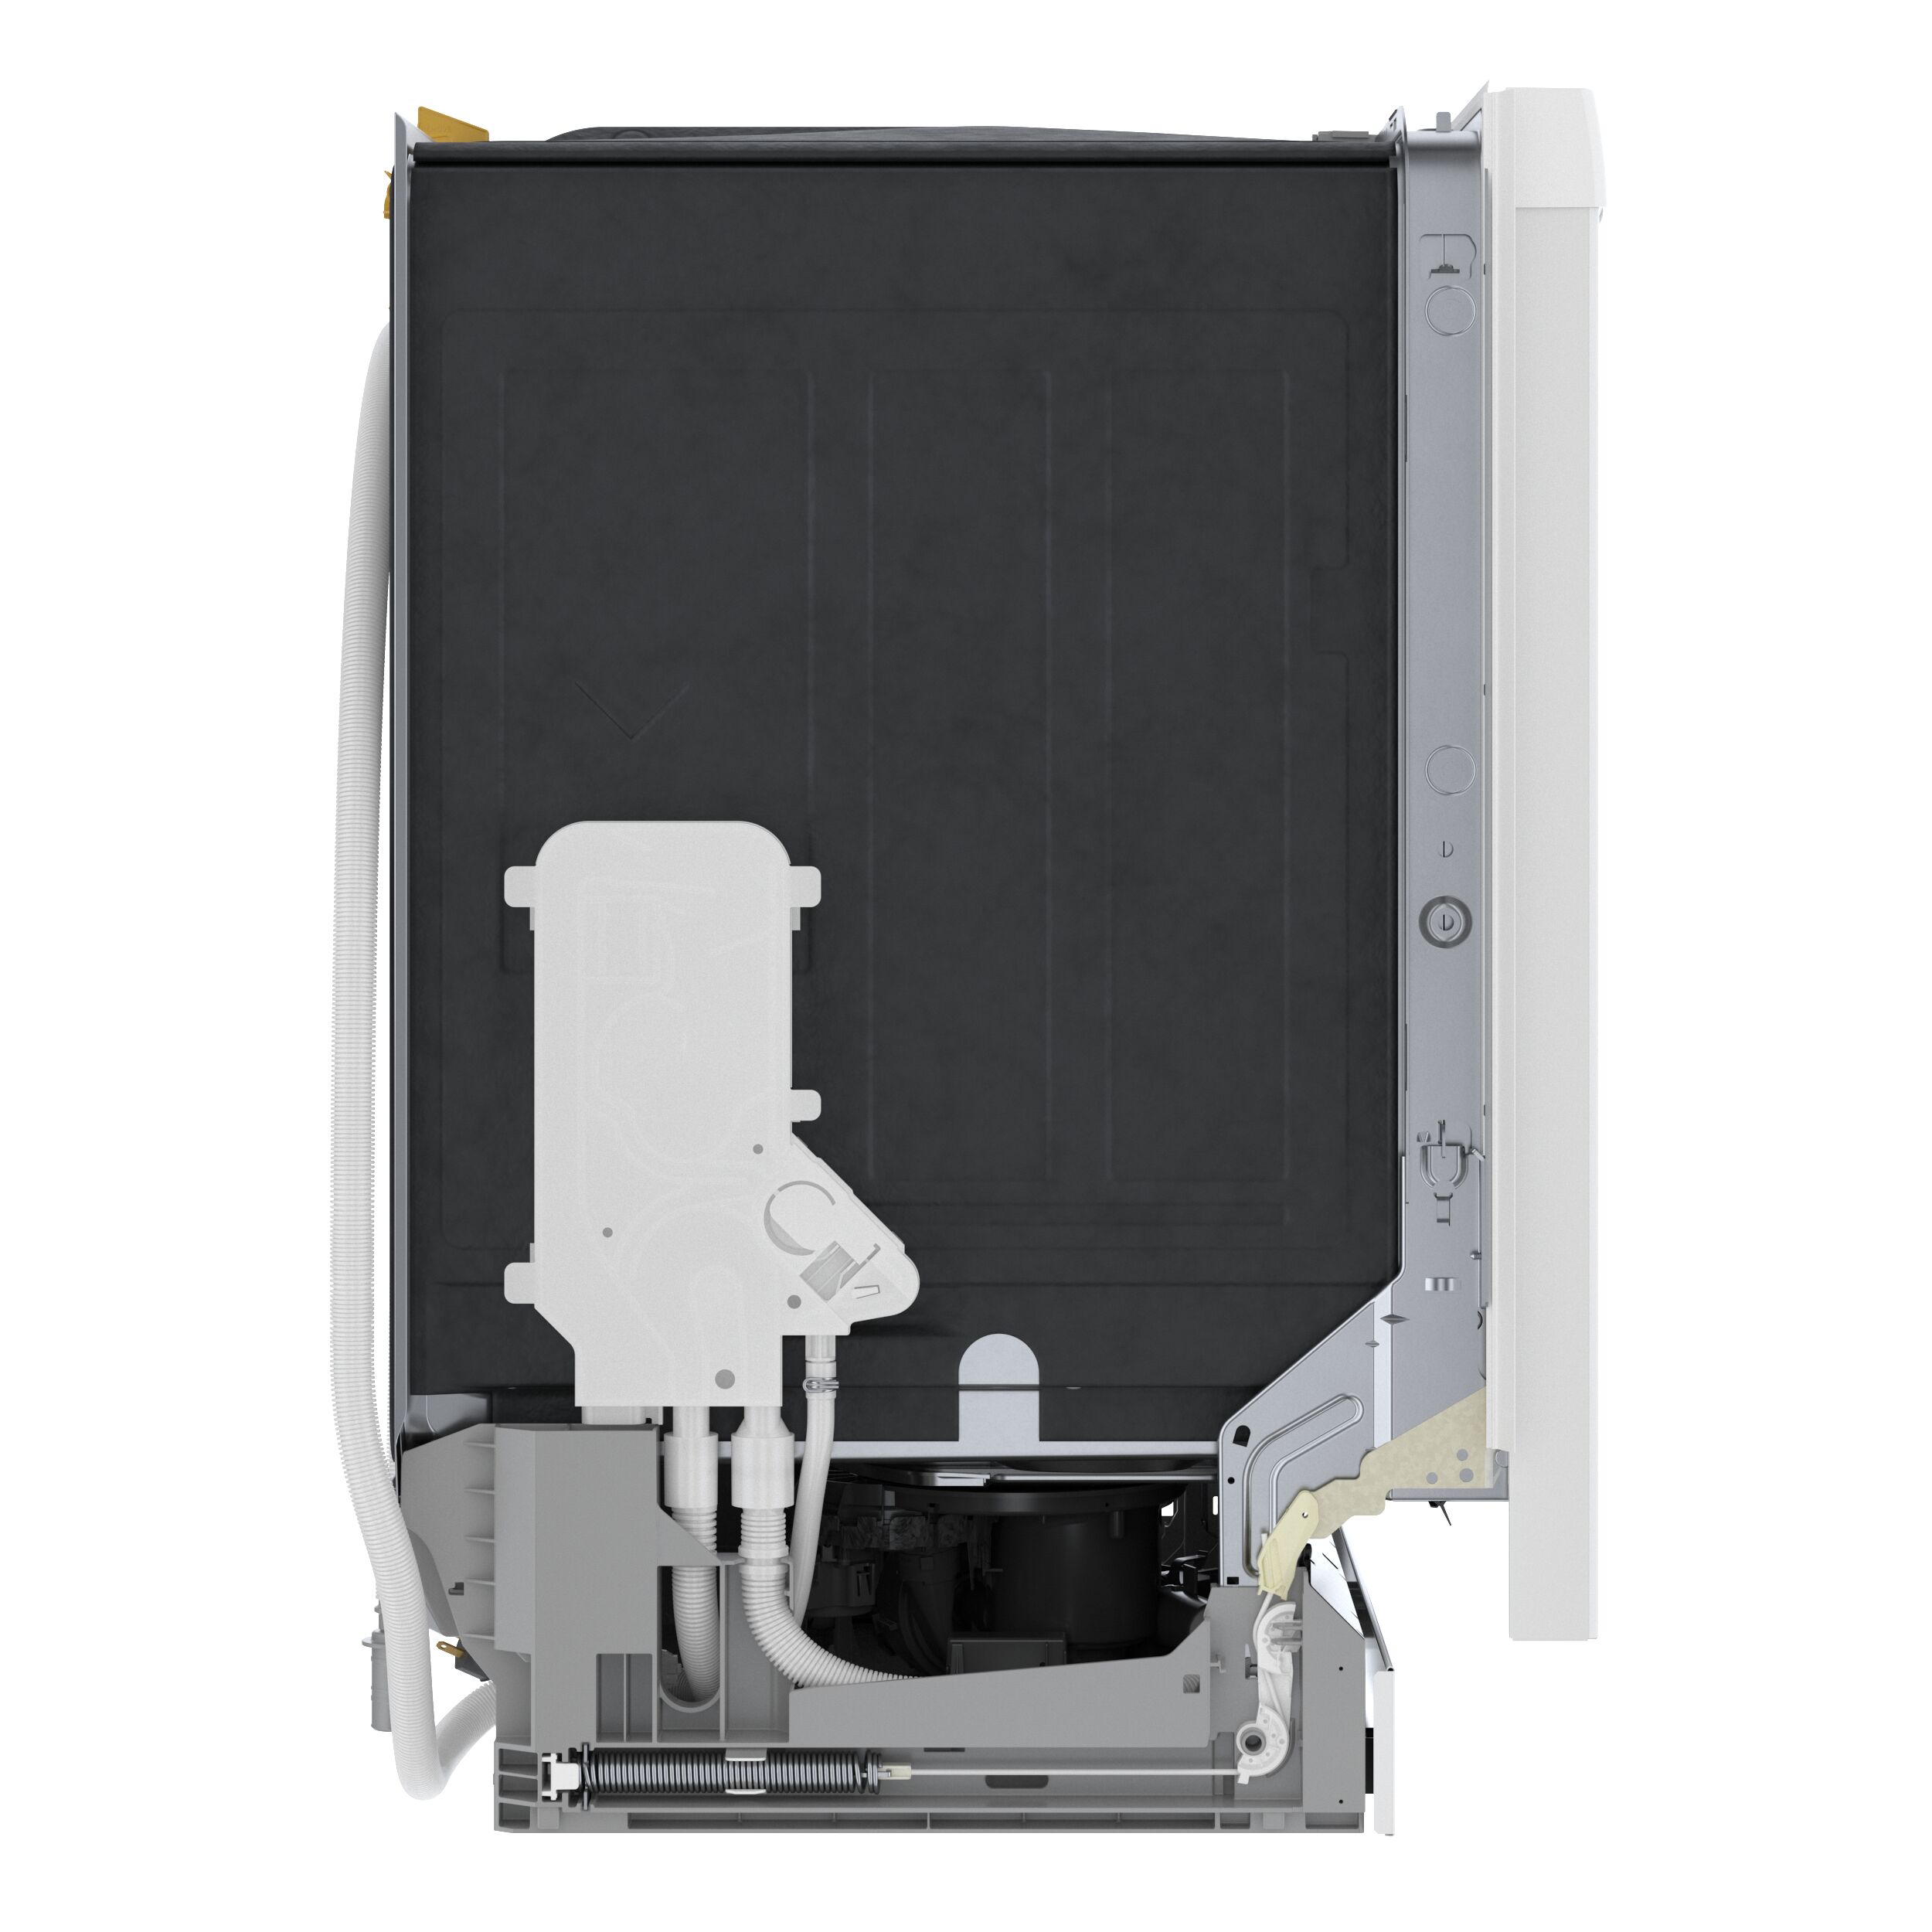 Bosch 300 Series 24 SS 3rd Rack 44 dBA Fully Integrated Dishwasher SH –  Alabama Appliance